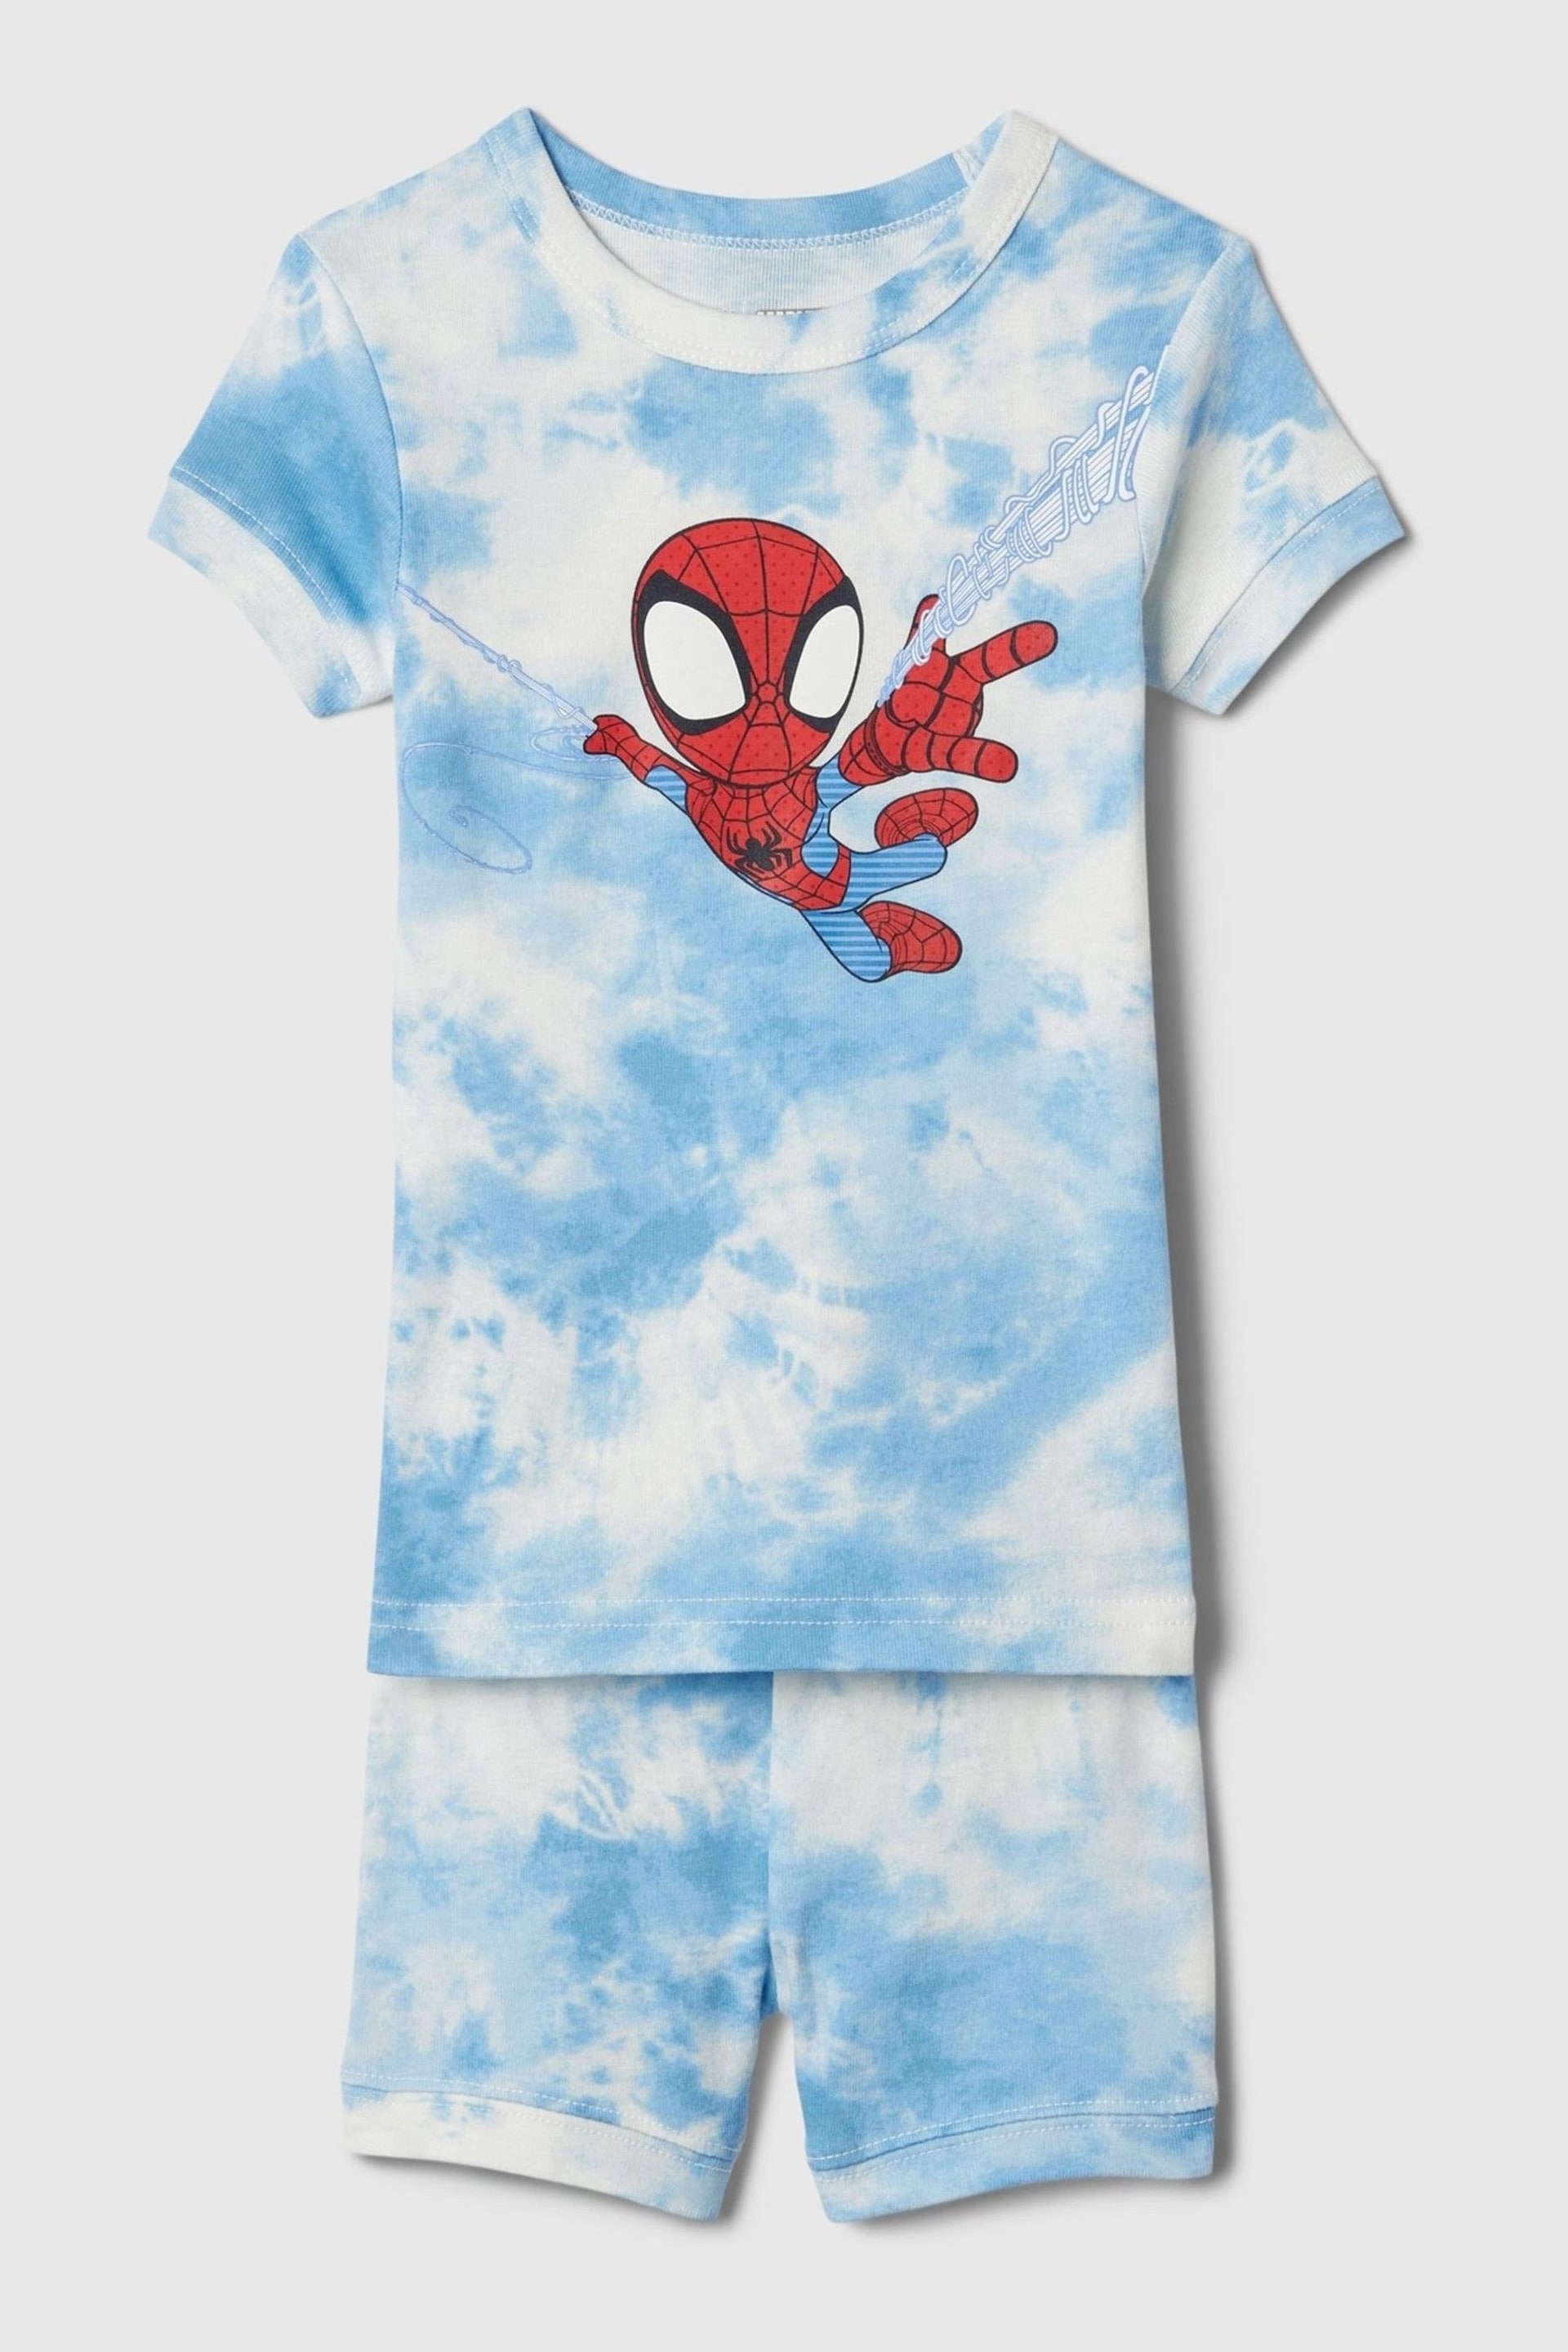 Gap Blue Marvel Spider-Man Organic Cottton Pyjama Set (6mths-5yrs) - Image 1 of 2